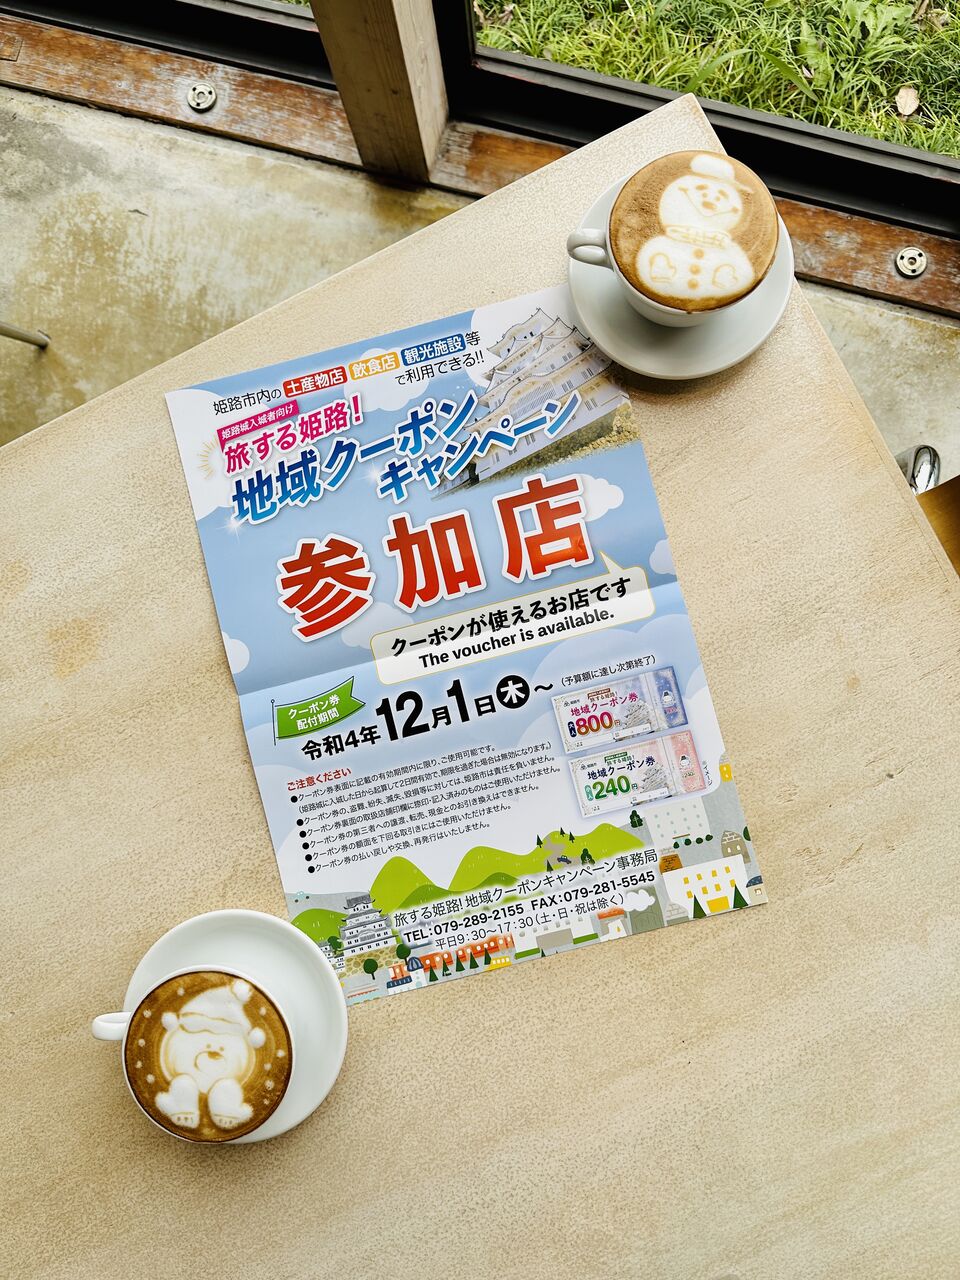 Railで利用できる 姫路城入城券を購入された方に 旅する姫路 地域クーポン券 が 配布されます 姫路でランチから夜カフェまで Cafe Rail カフェ レイル